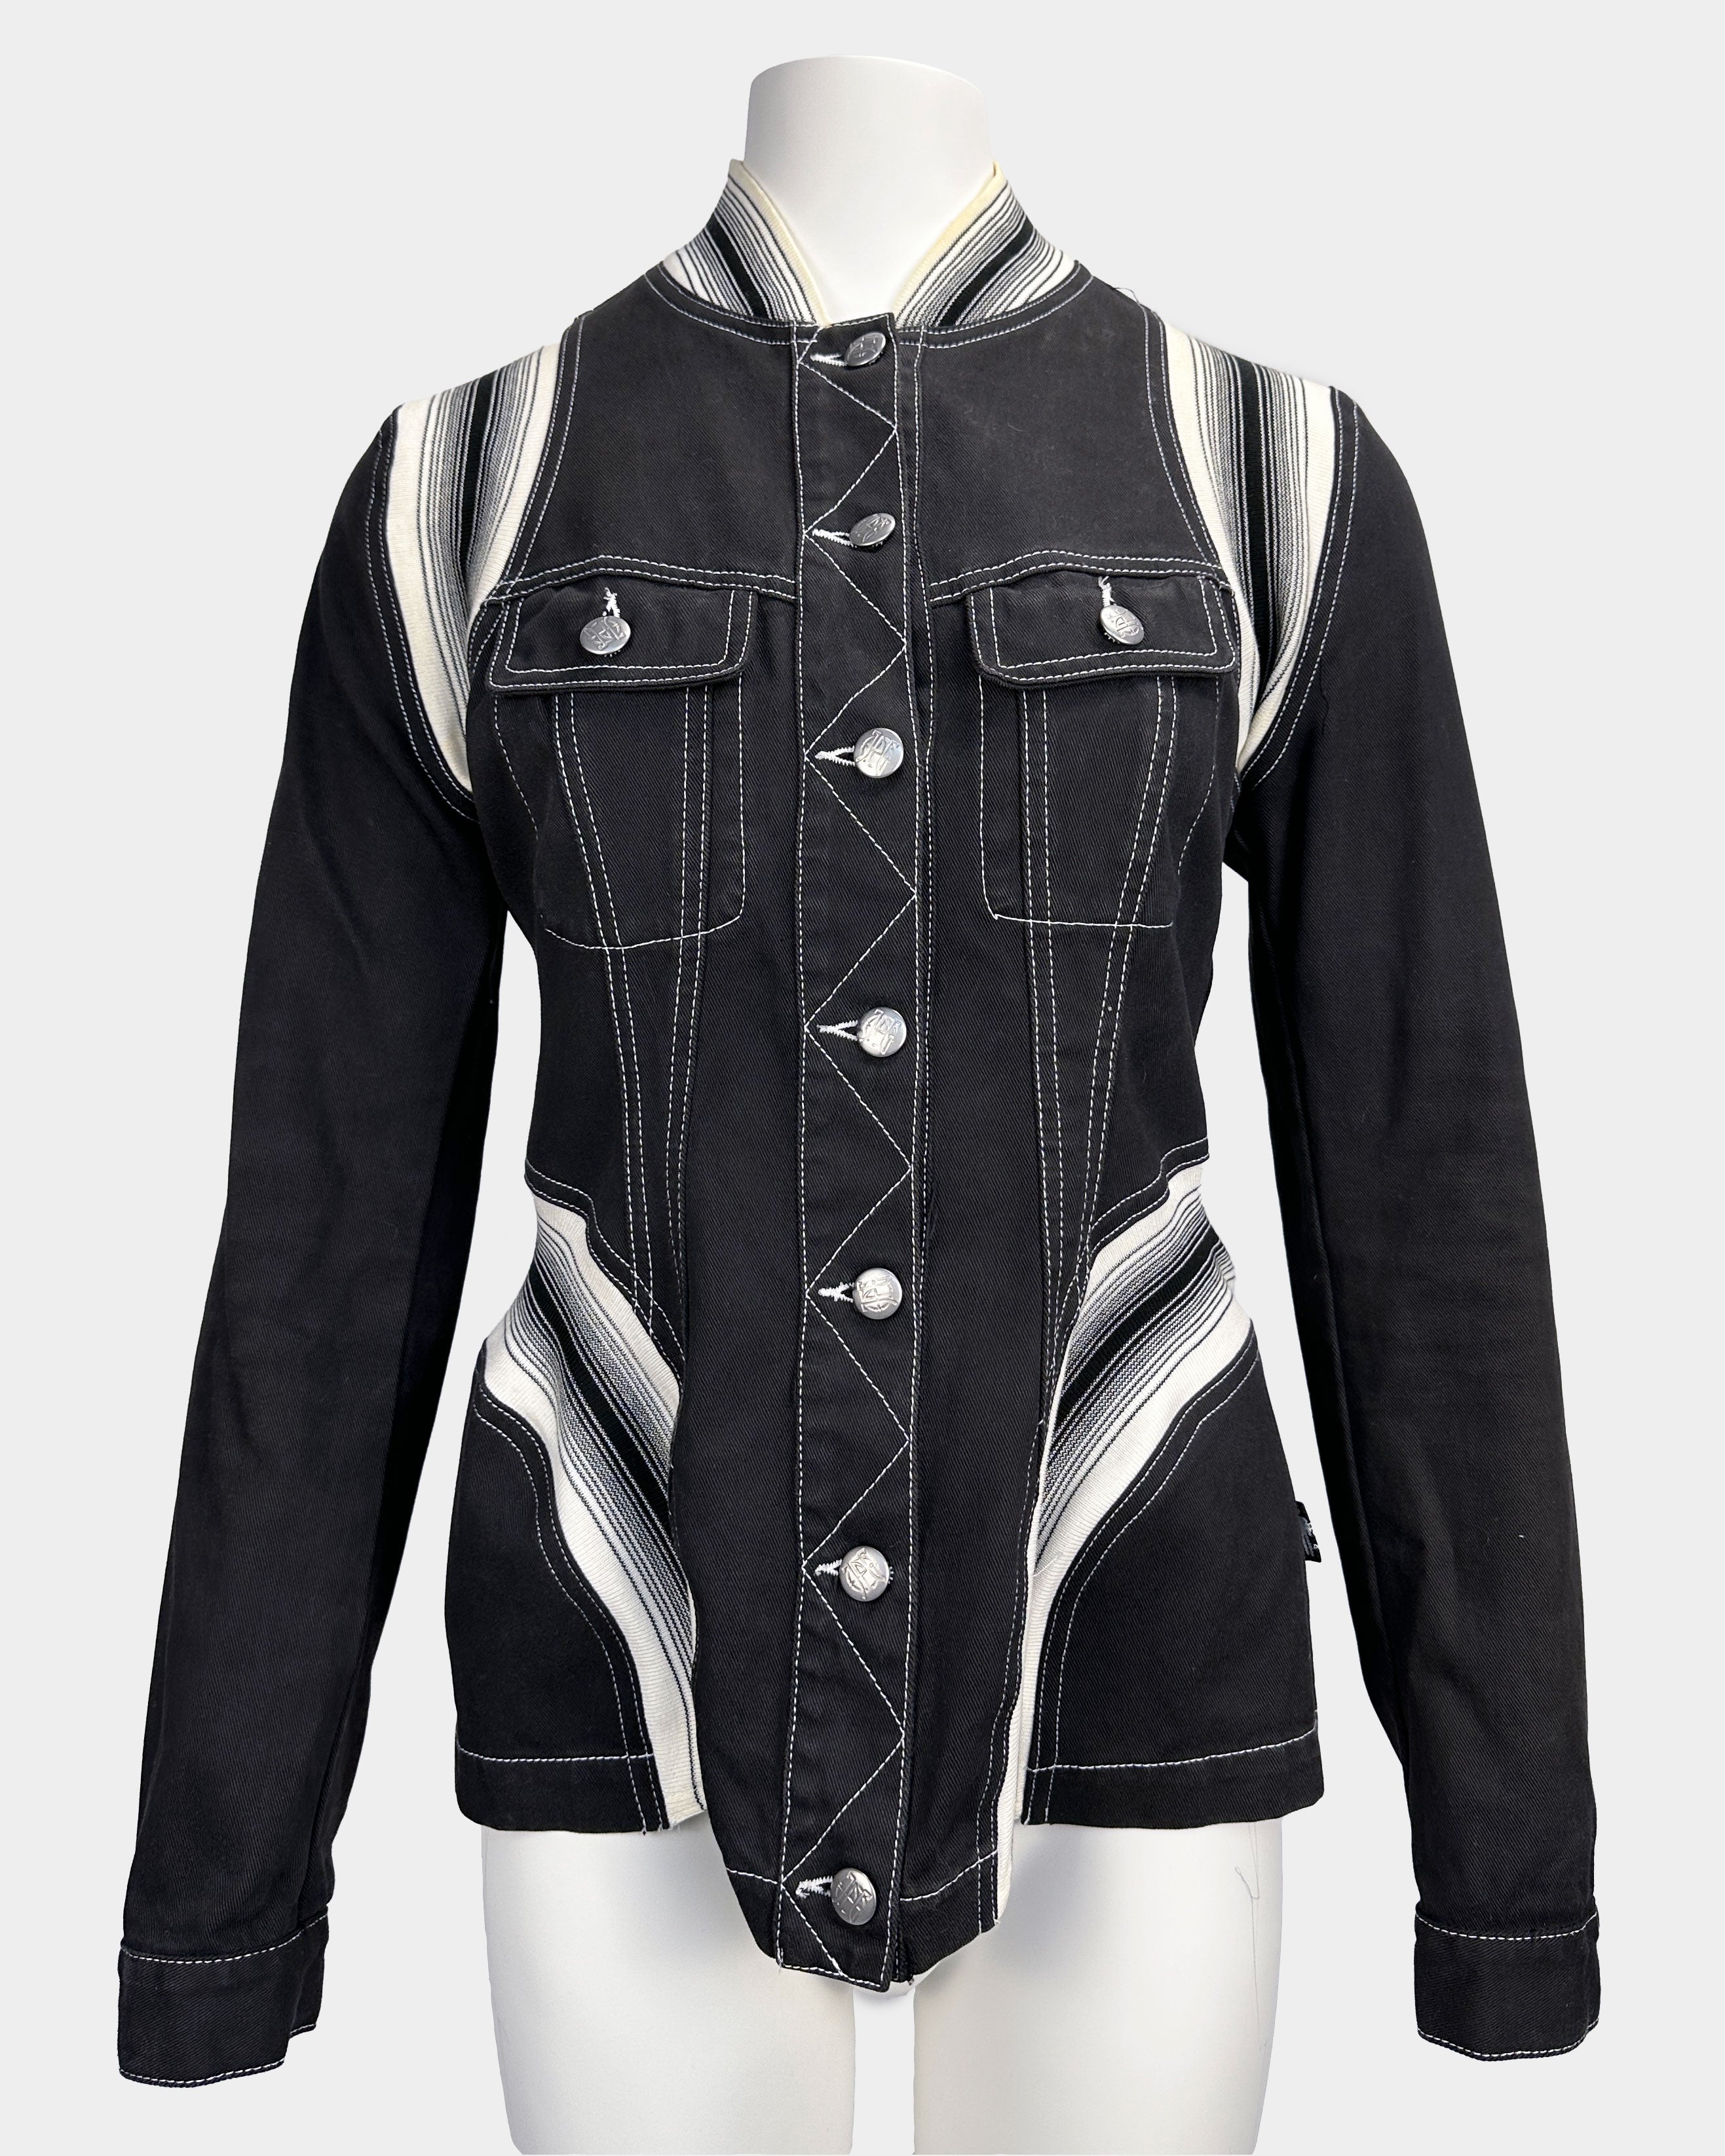 Jean Paul Gaultier Black & White Light Jacket 1990's – Vintage TTS